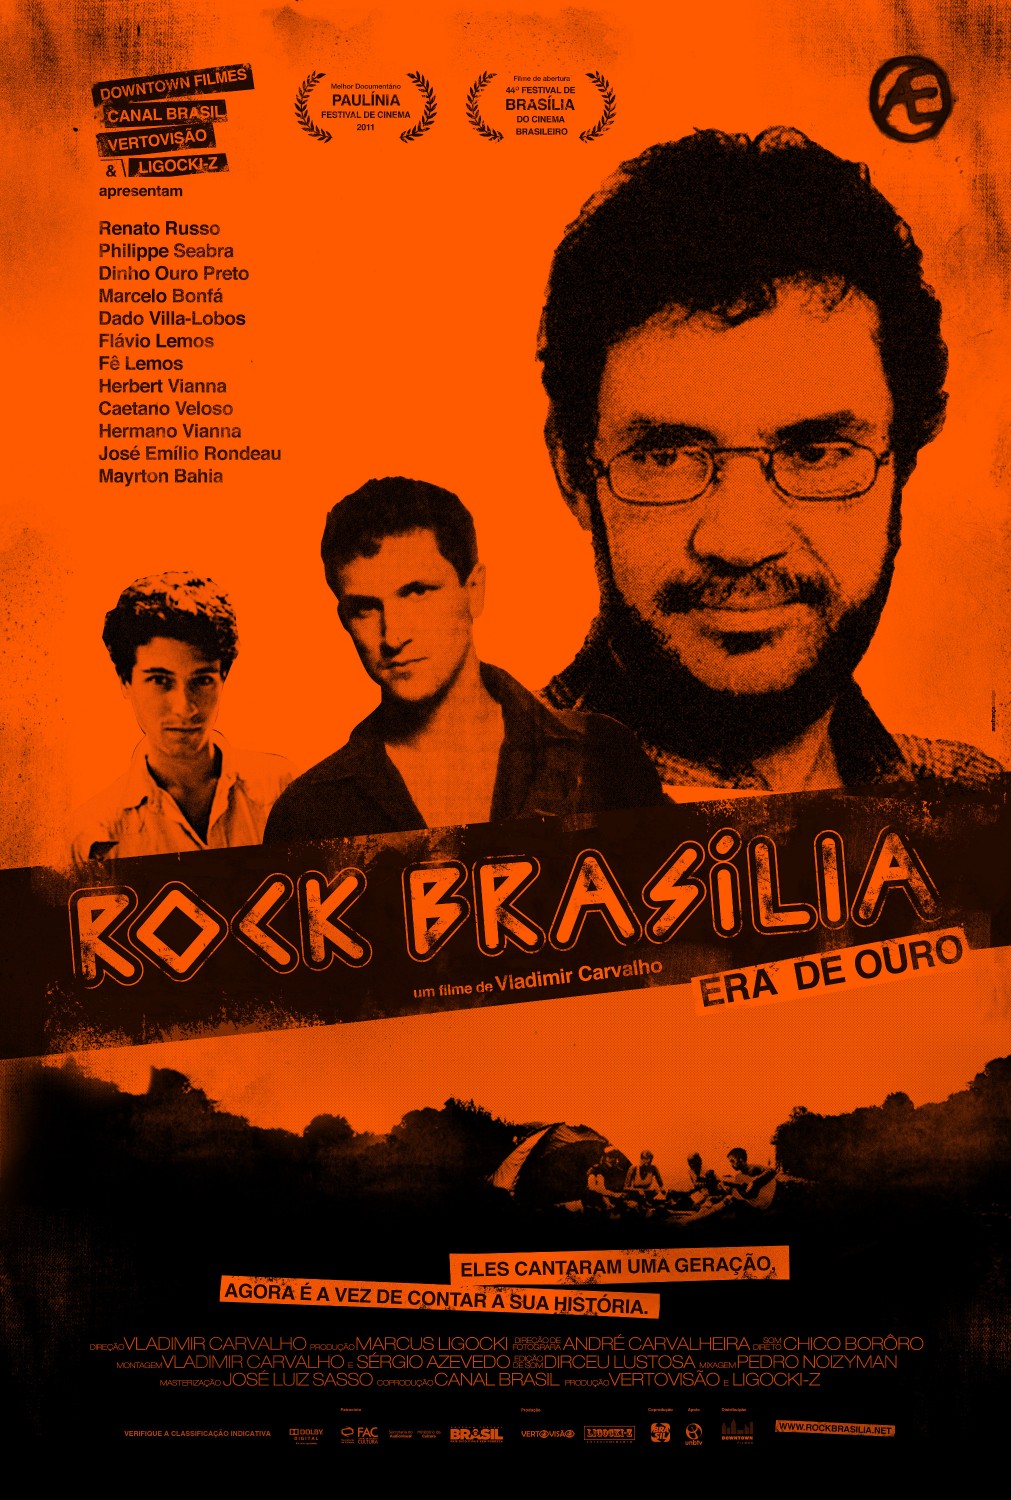 Extra Large Movie Poster Image for Rock Brasilia - Era de Ouro 